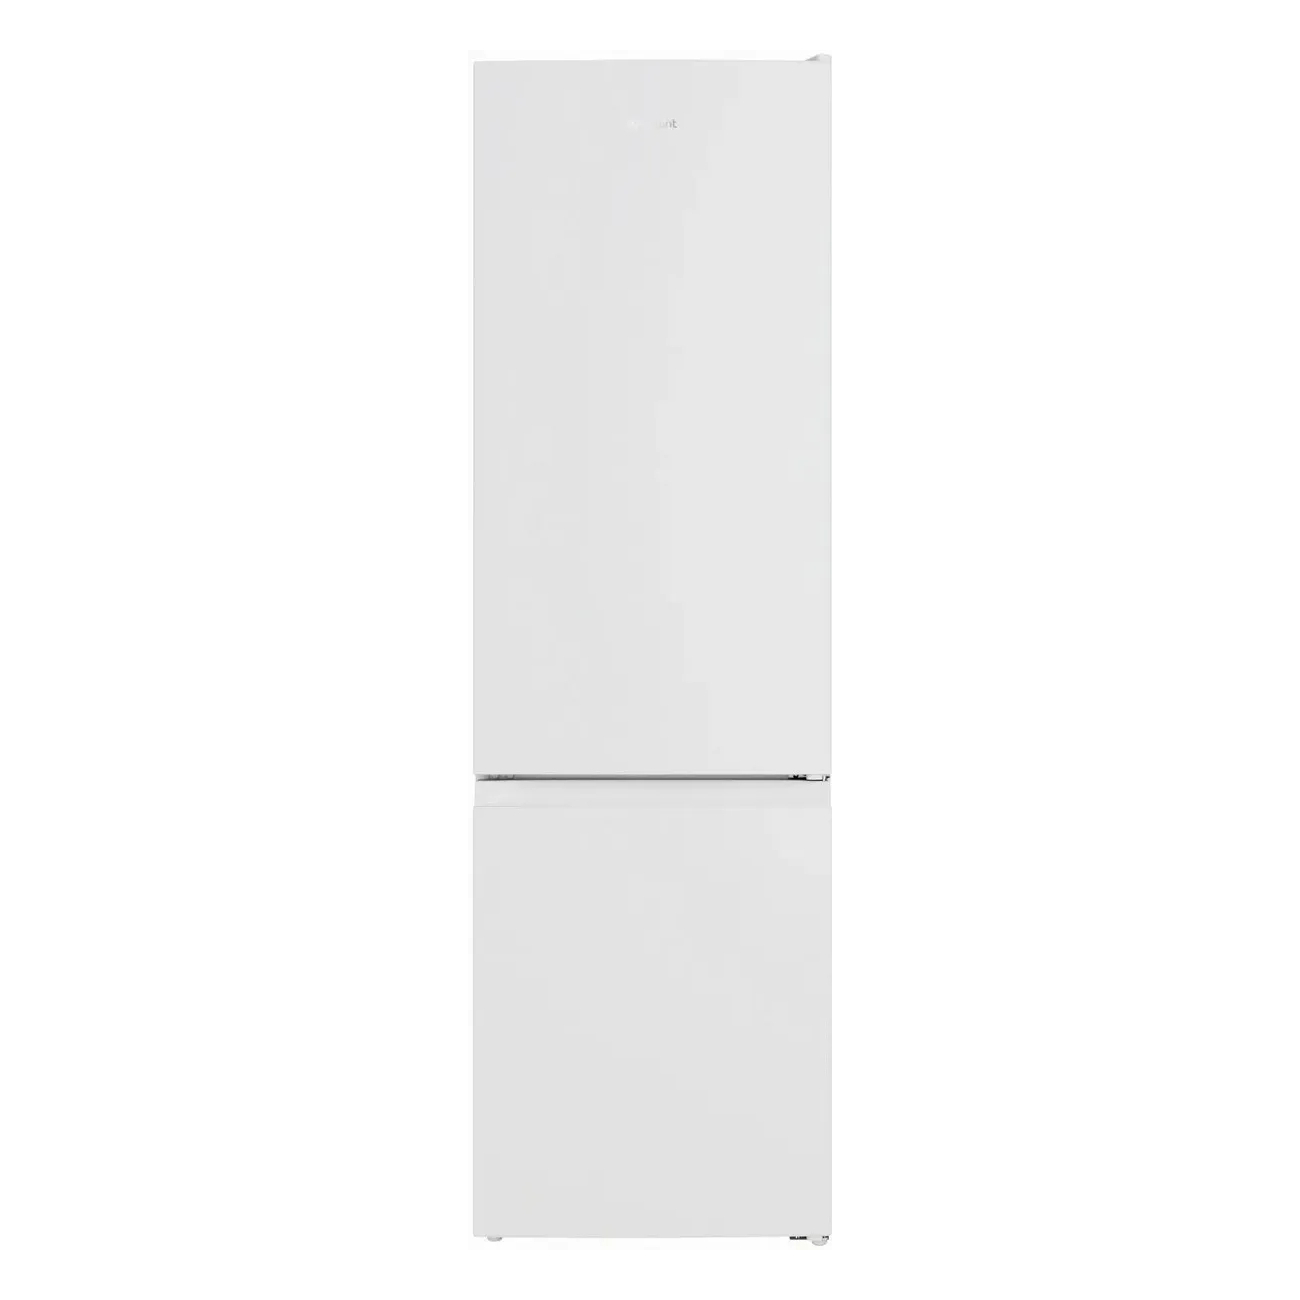 Холодильник HotPoint HT 4200 W белый двухкамерный холодильник hotpoint hts 4200 m мраморный